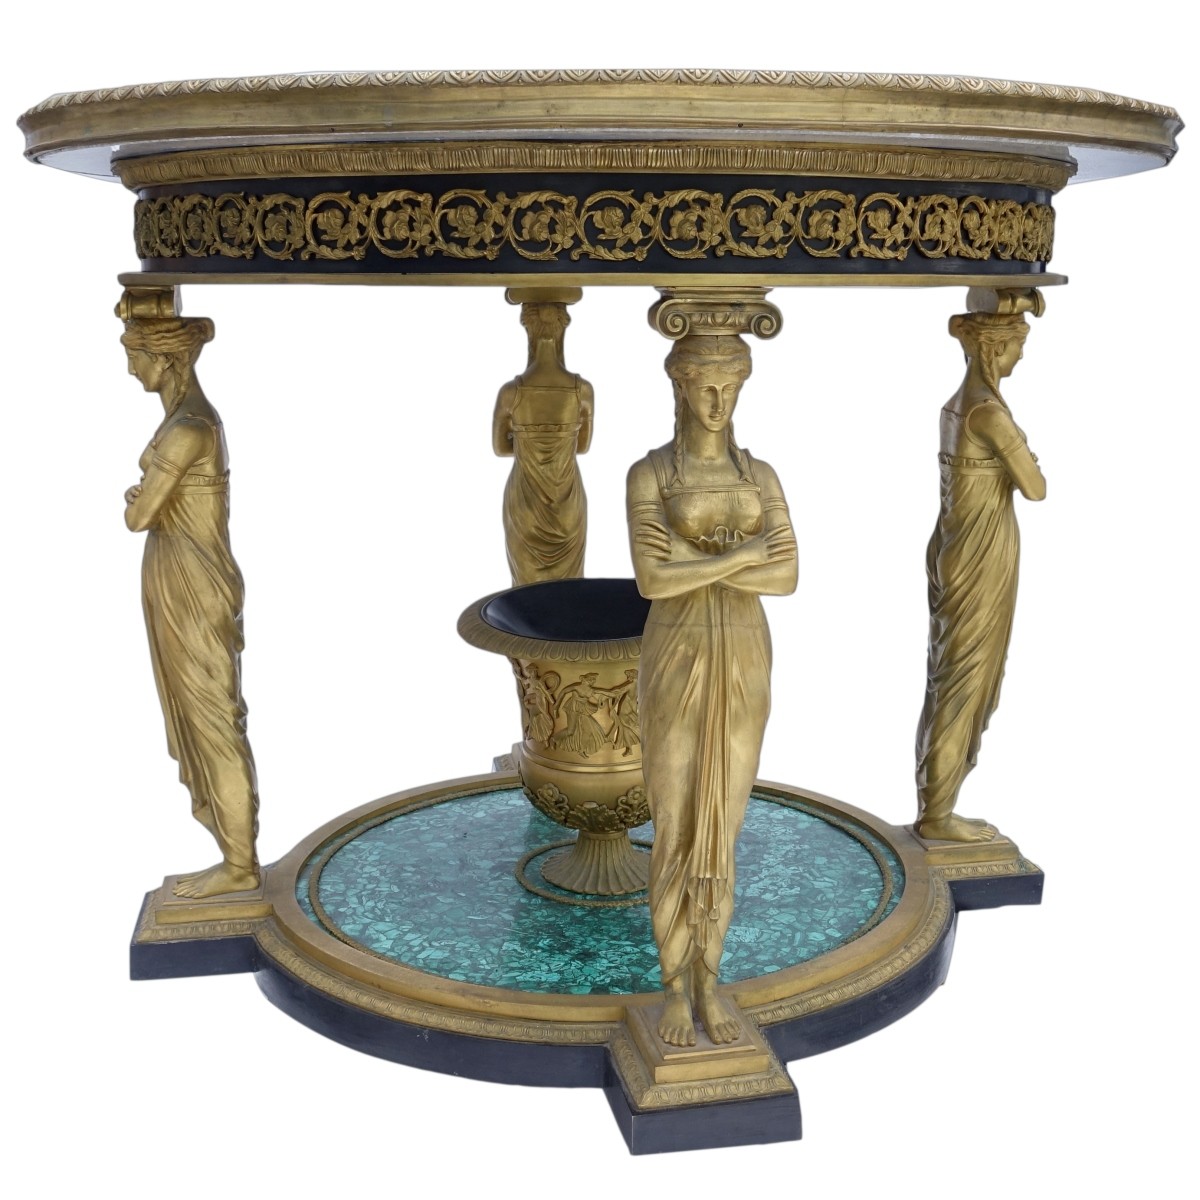 Empire Style Bronze and Malachite Table